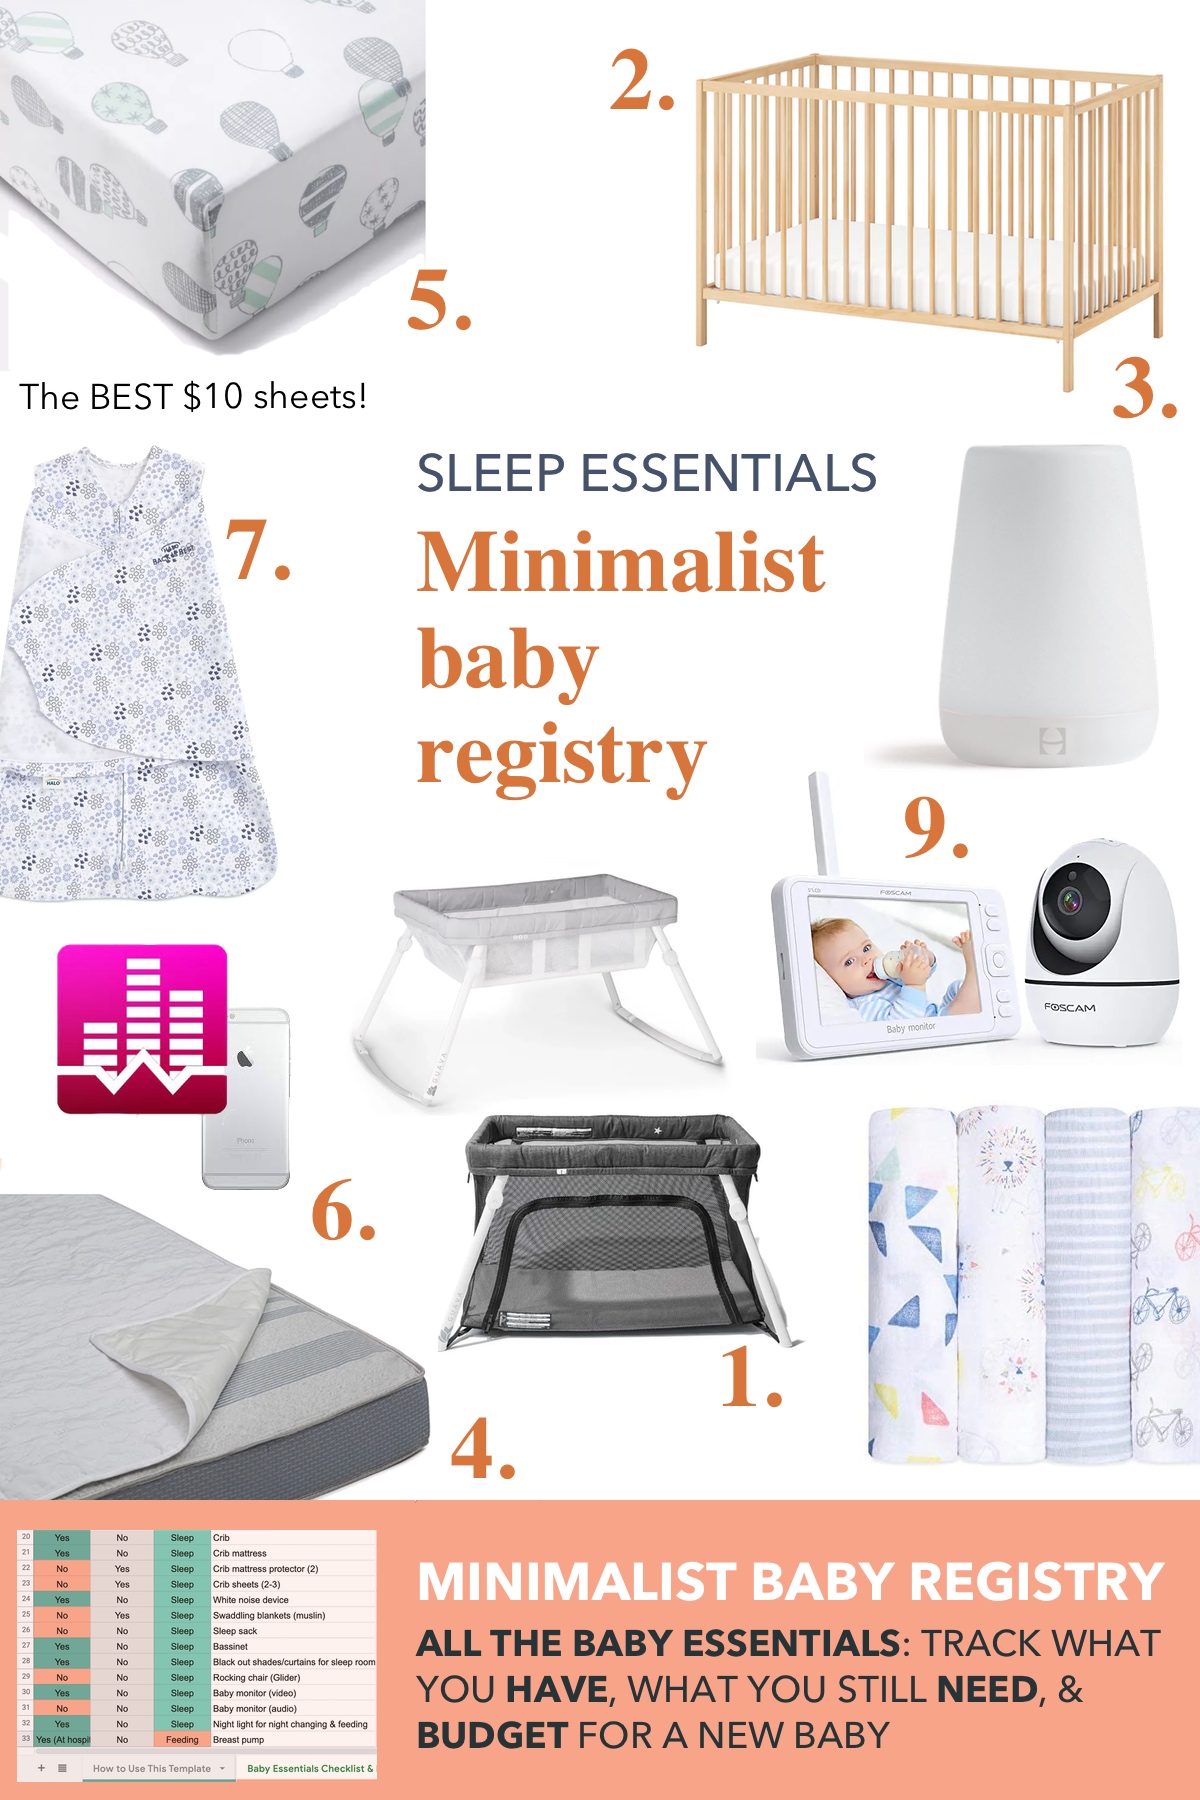 https://frugal-bonvivant.com/wp-content/uploads/2021/09/baby-sleep-essentials.jpg